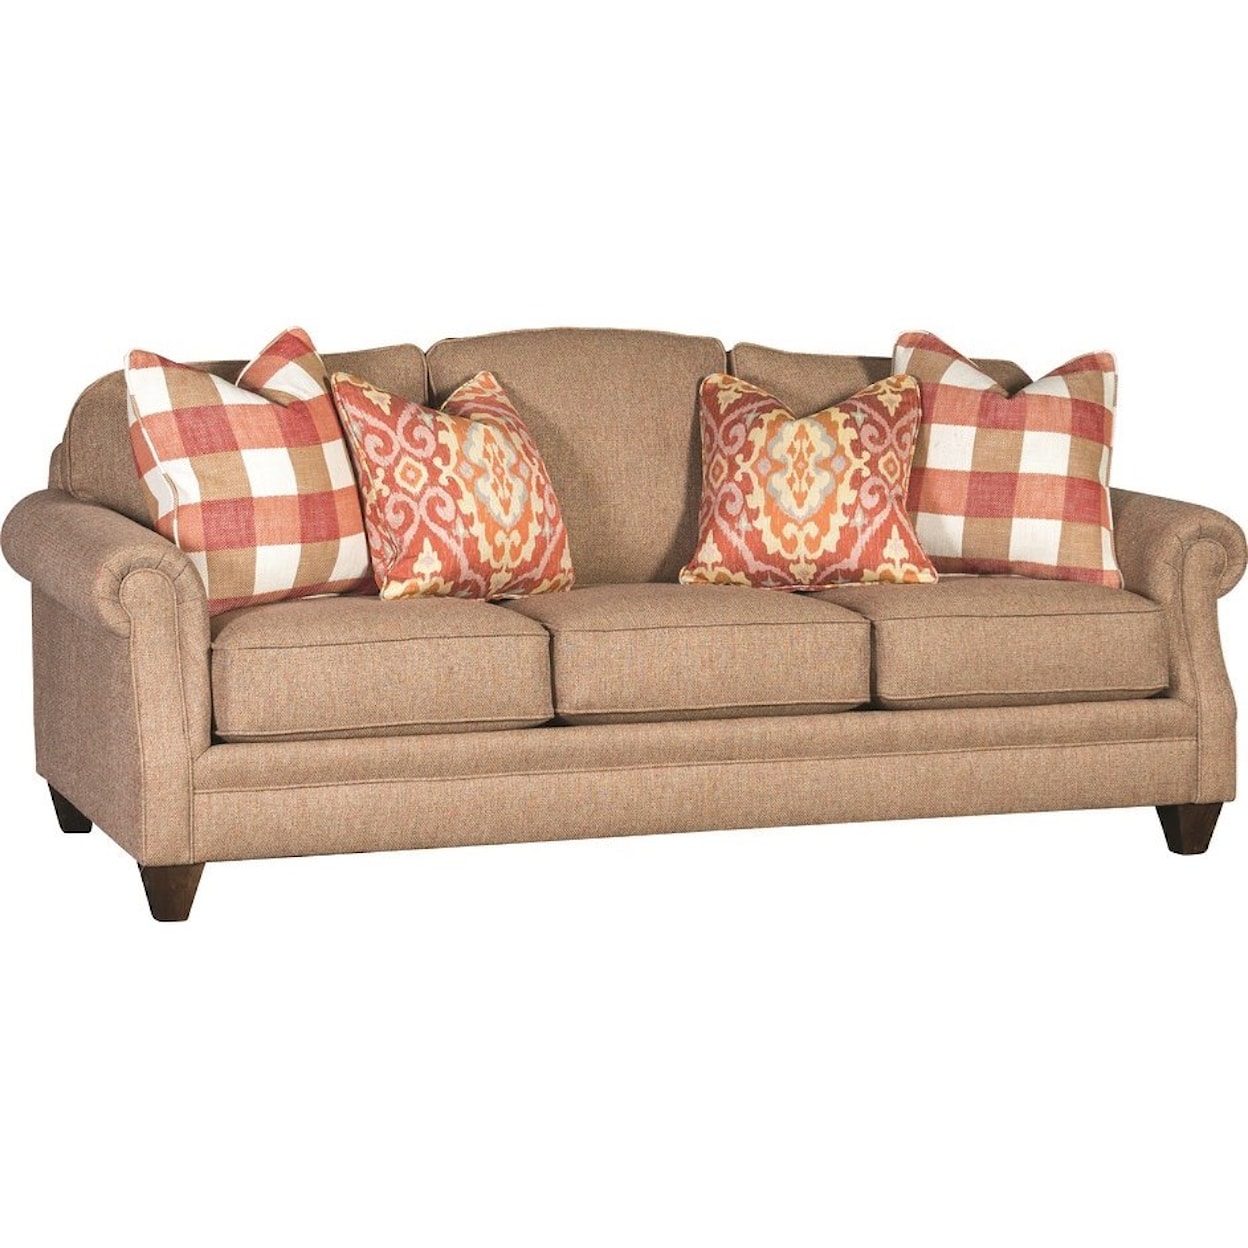 Mayo 4290 Traditional Styled Sofa